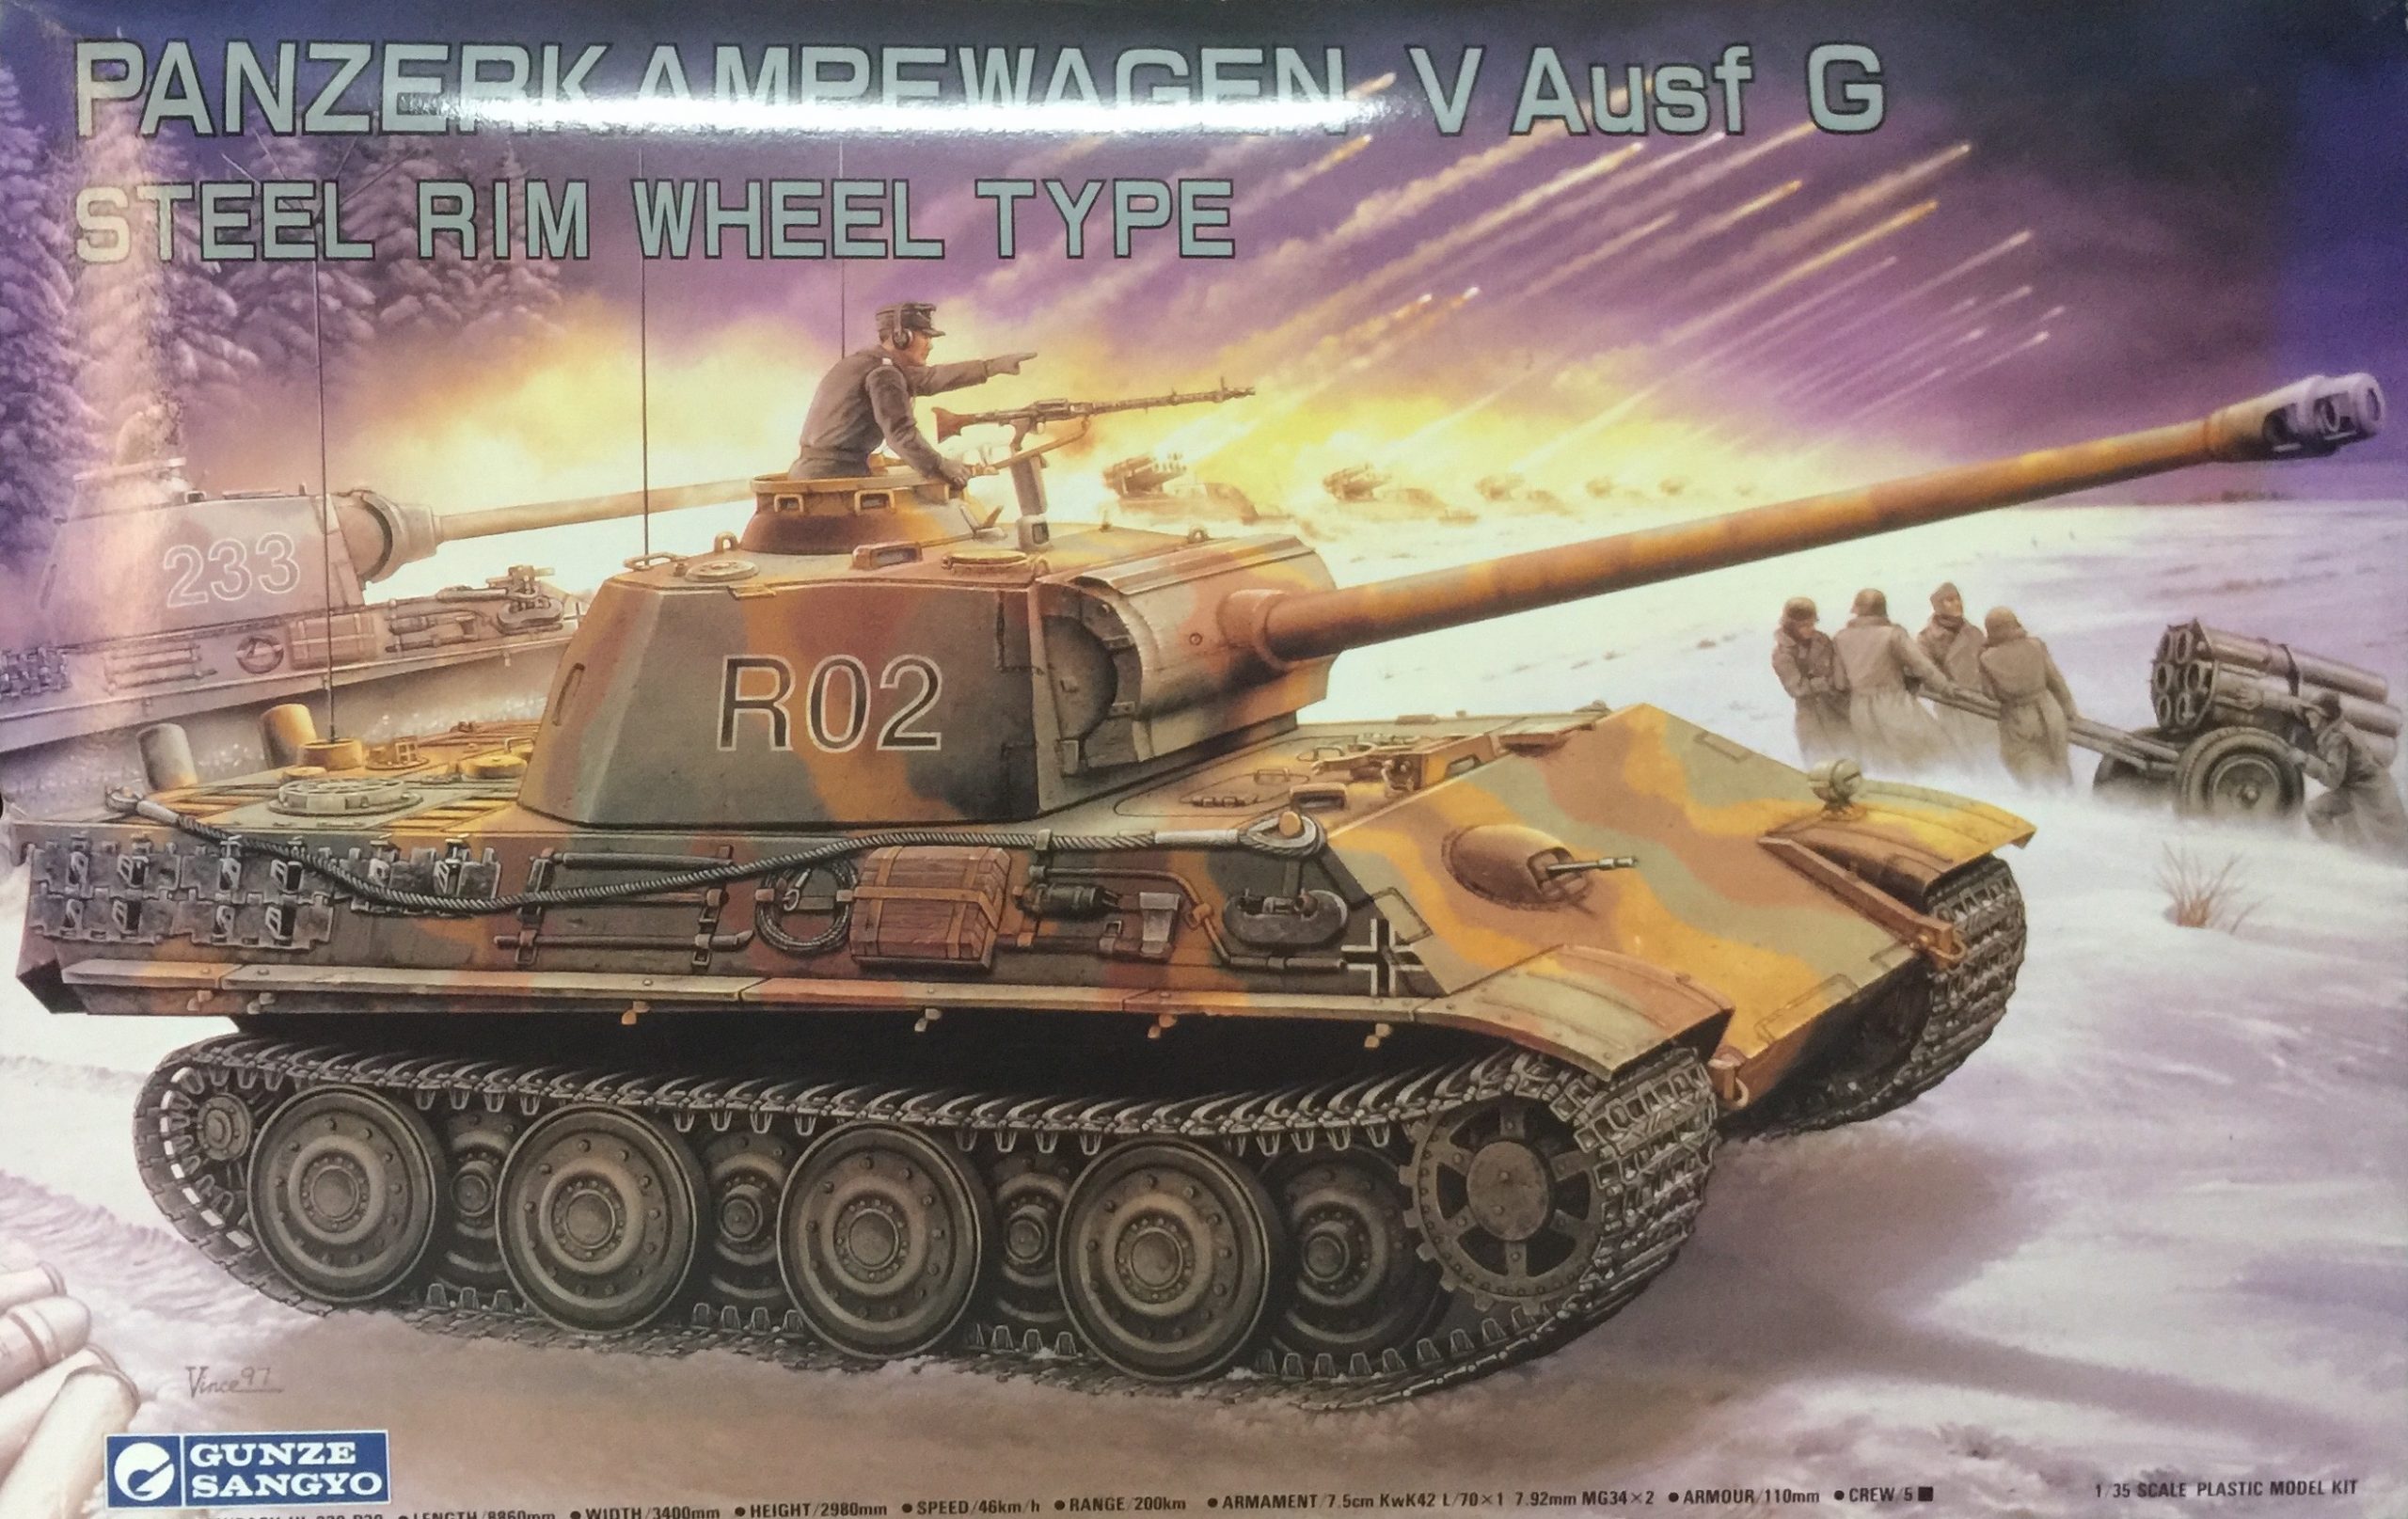 Gunze Sangyo Panzerkampfwagen V Ausf G Steele Rim Wheel Type Ref 785 Escala 1/35